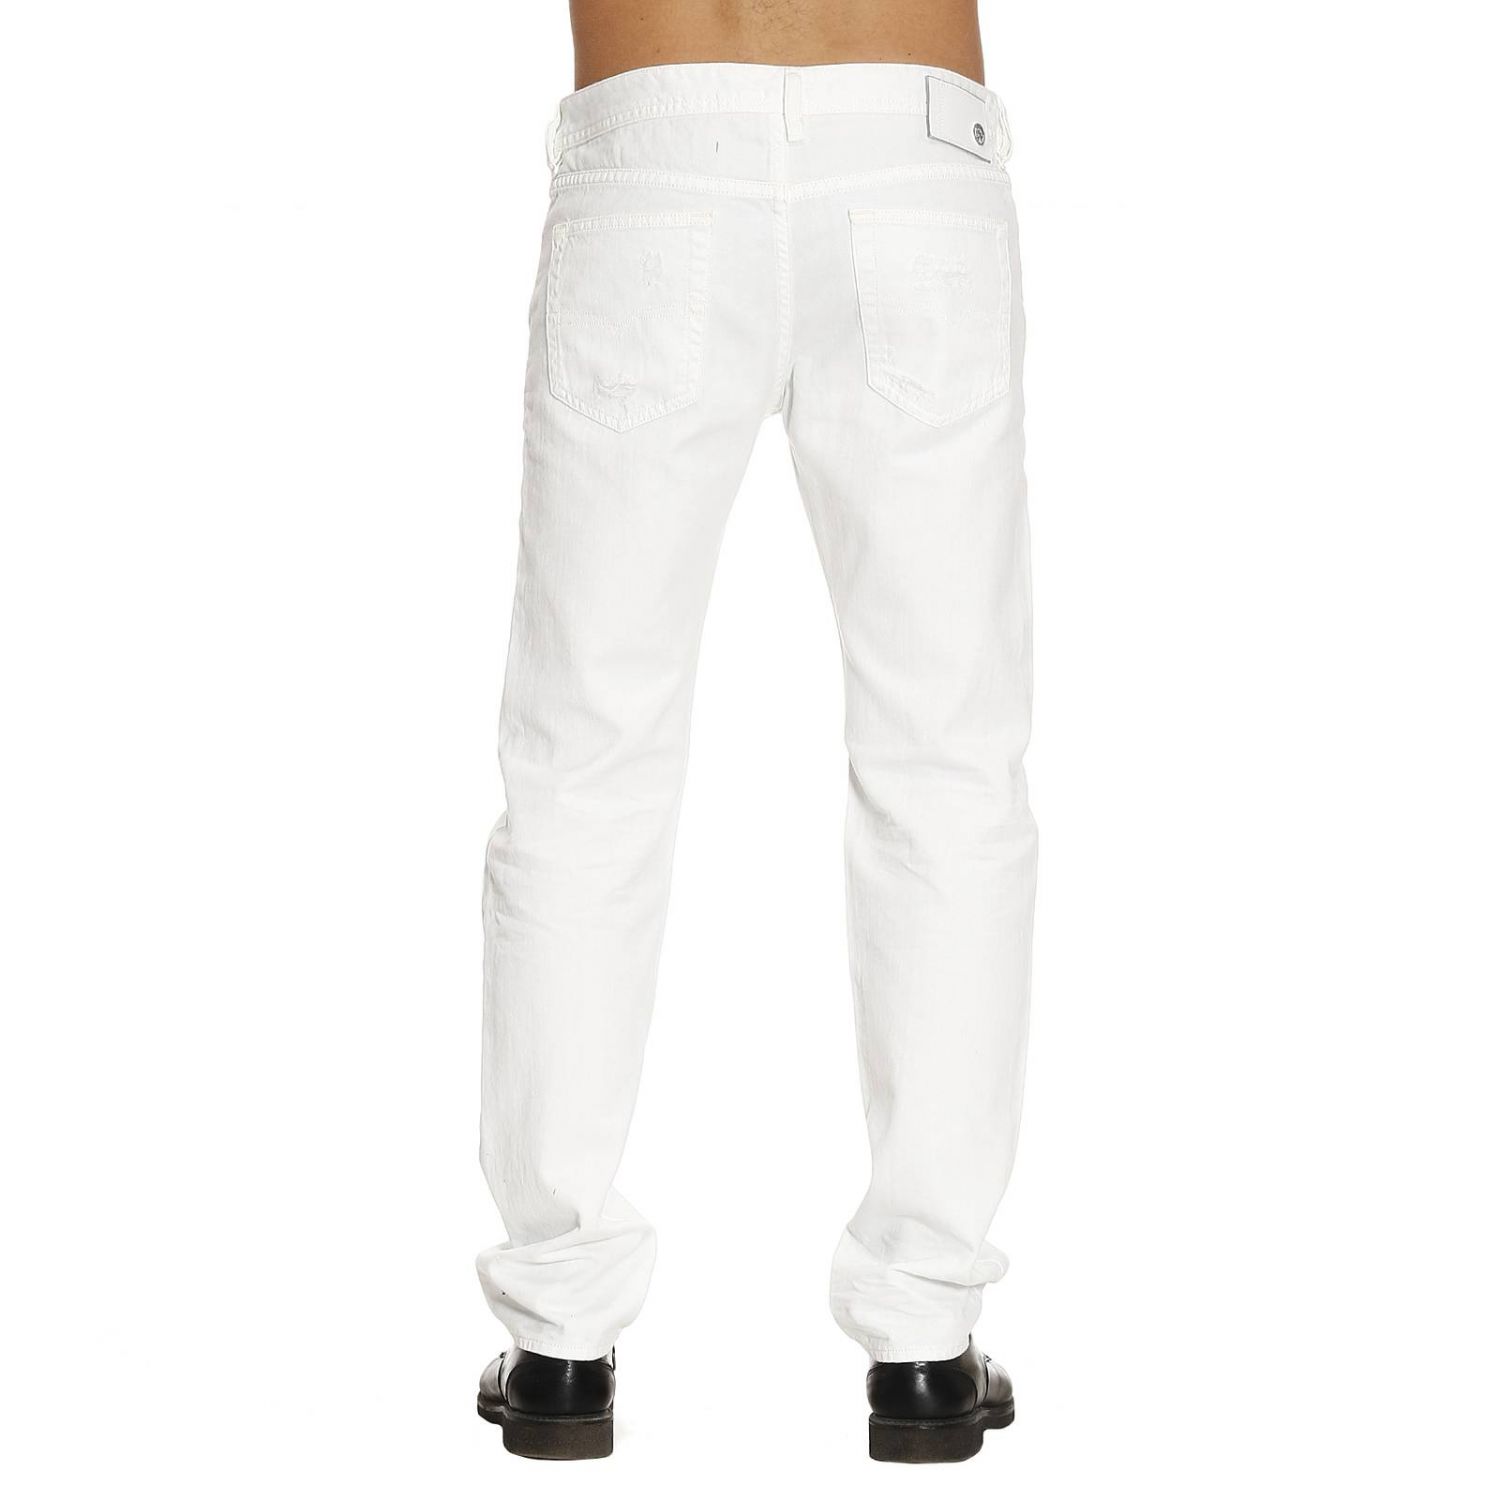 Diesel Outlet: Jeans men - White | Jeans Diesel 00SDHB 680K GIGLIO.COM